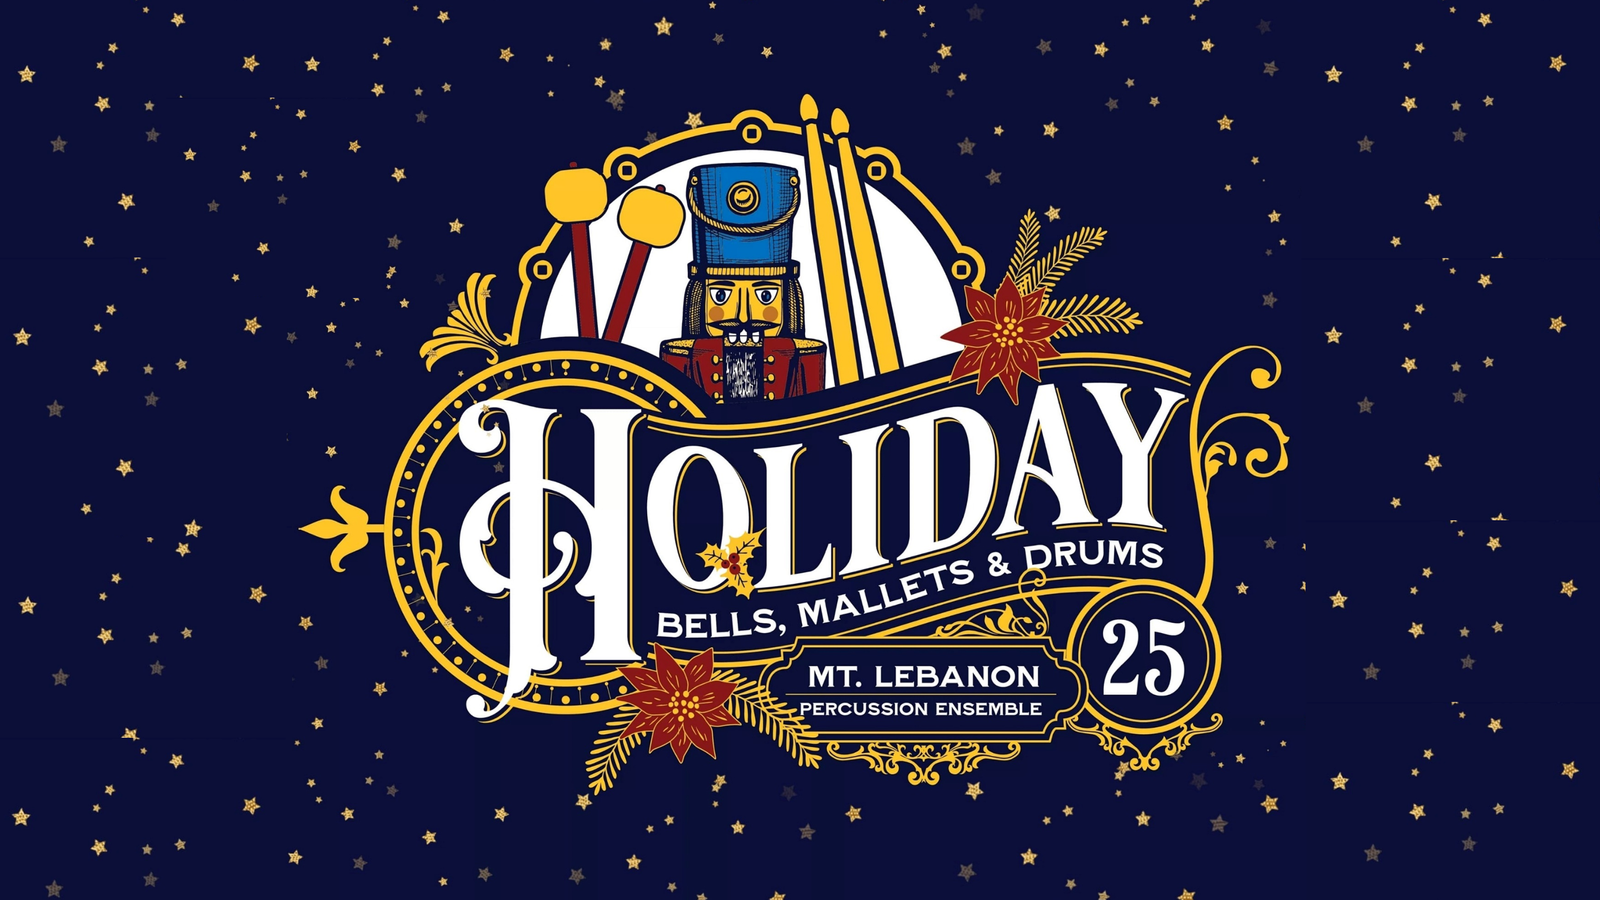 Holiday Bells, Mallets & Drums - A Celebration